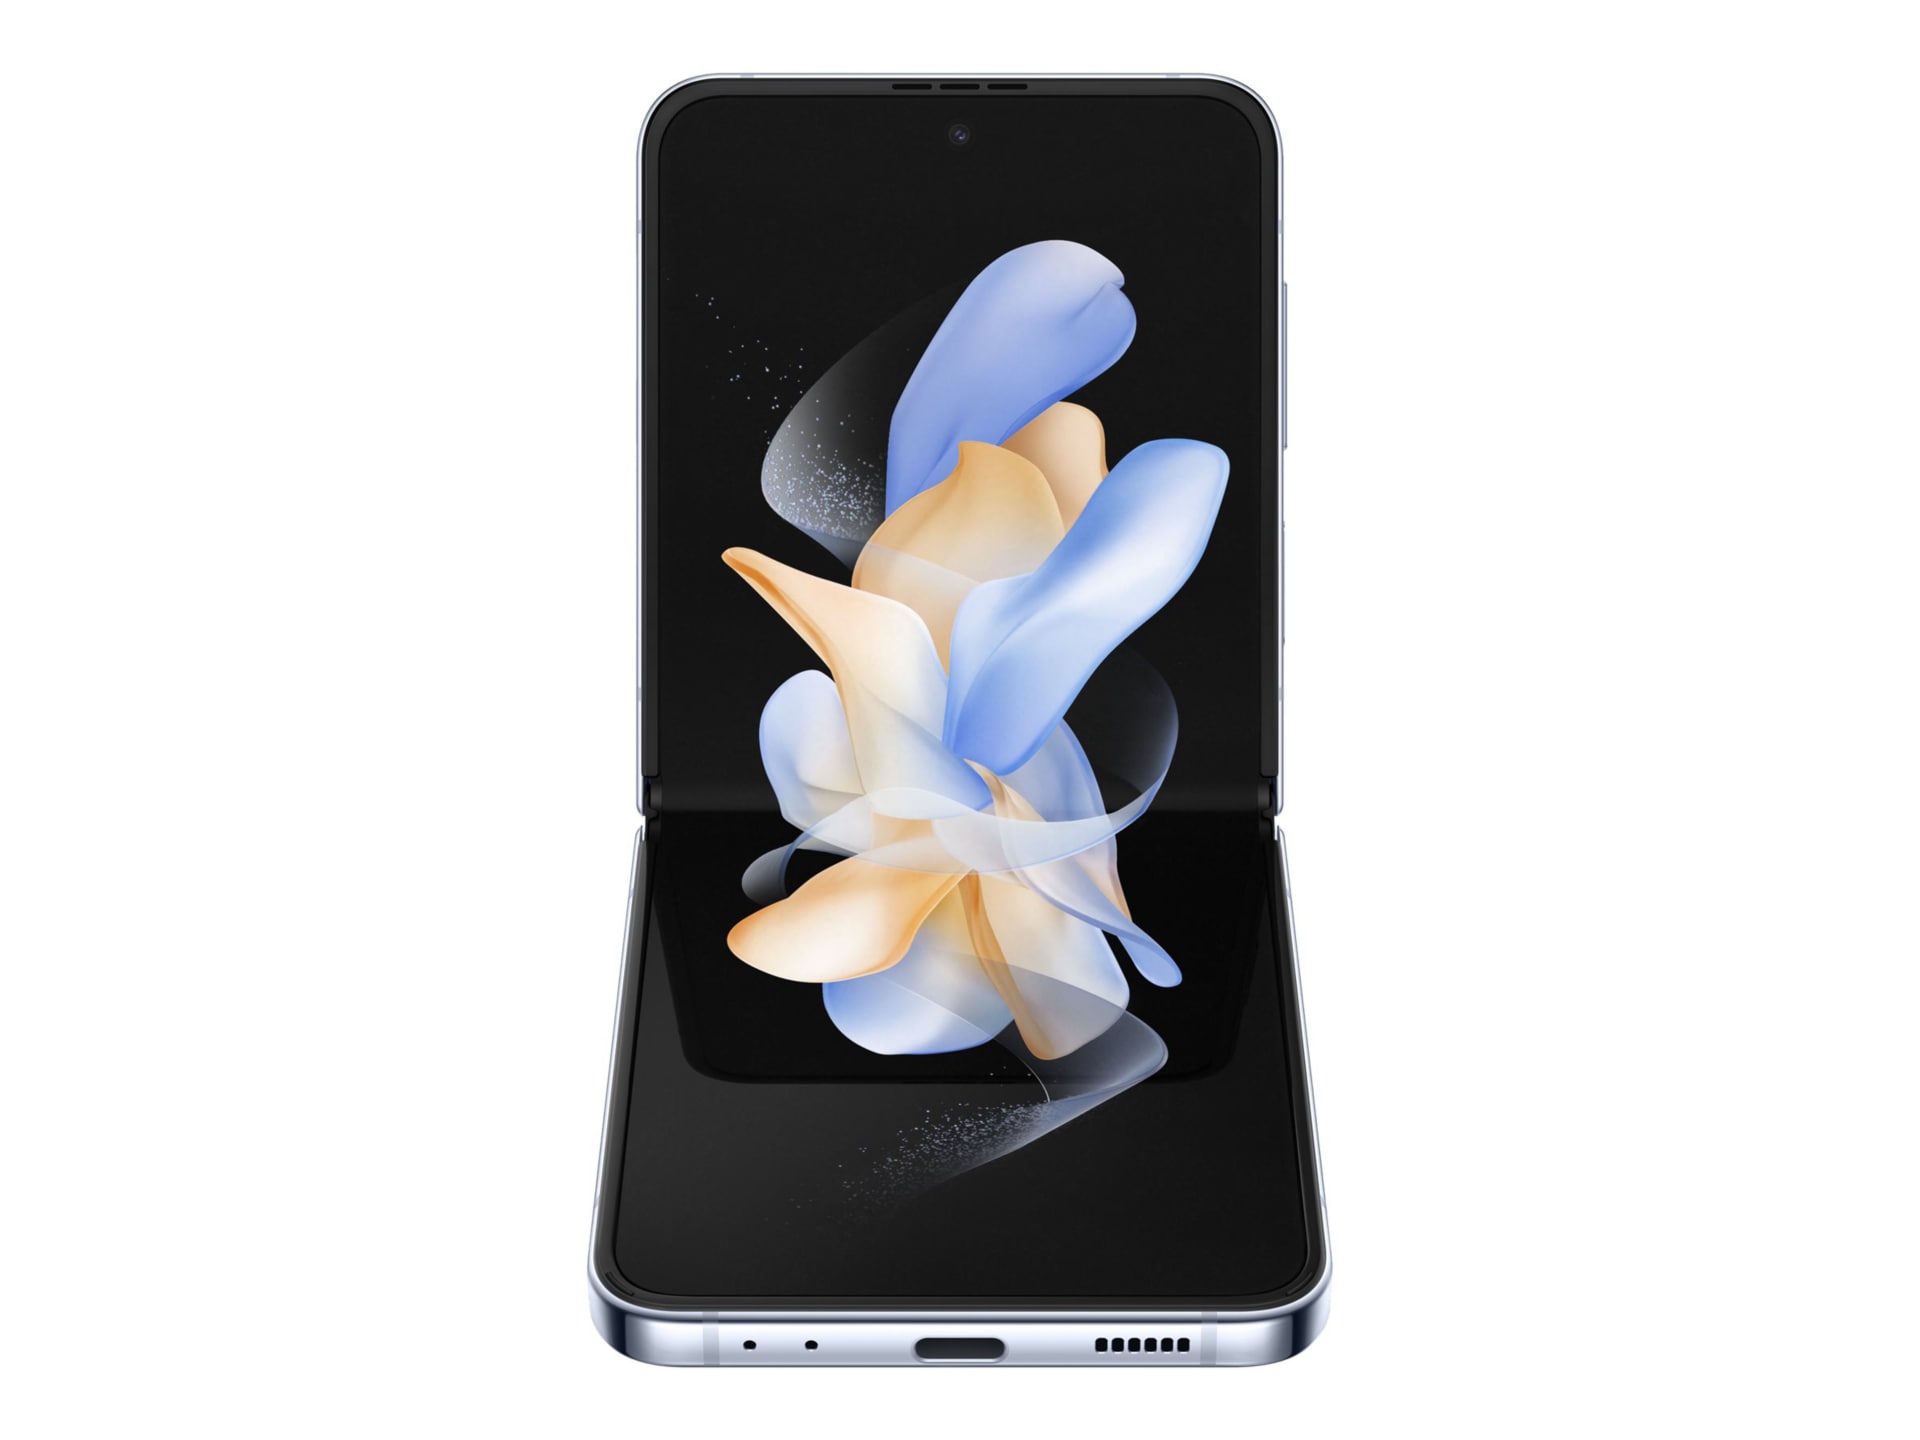 Samsung Galaxy Z Flip4 - blue - 5G smartphone - 512 GB - GSM